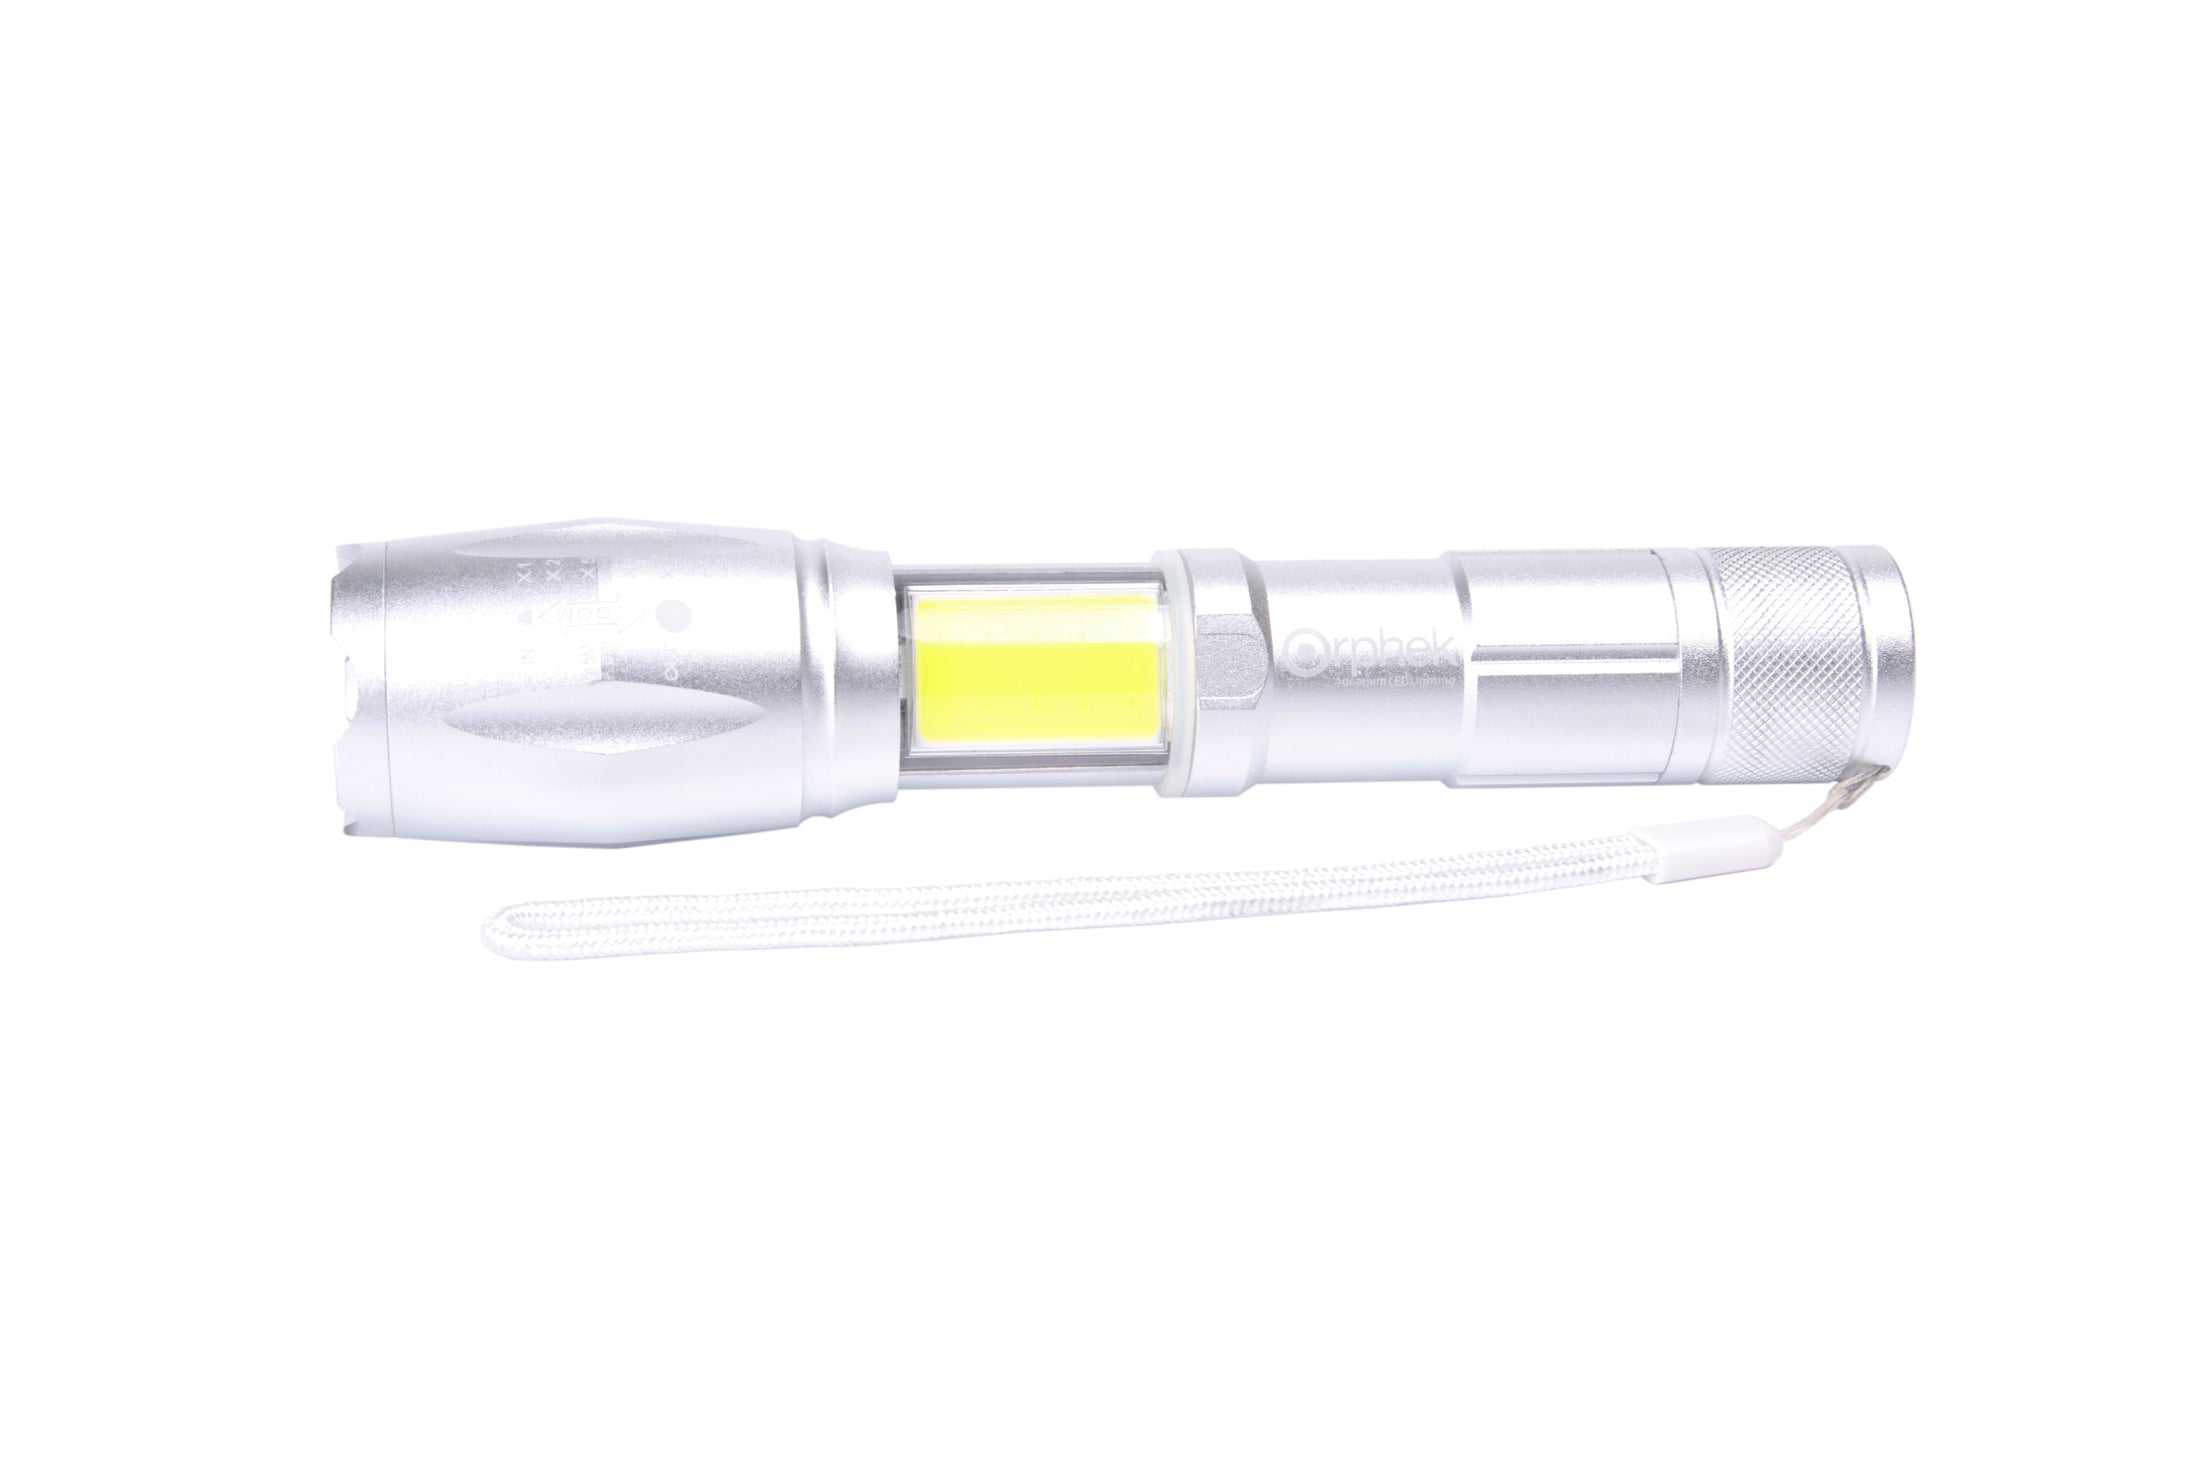 Torce Orphek Combo - Azurelite 2 LED Blu/Fox Fire White LED Super Bright